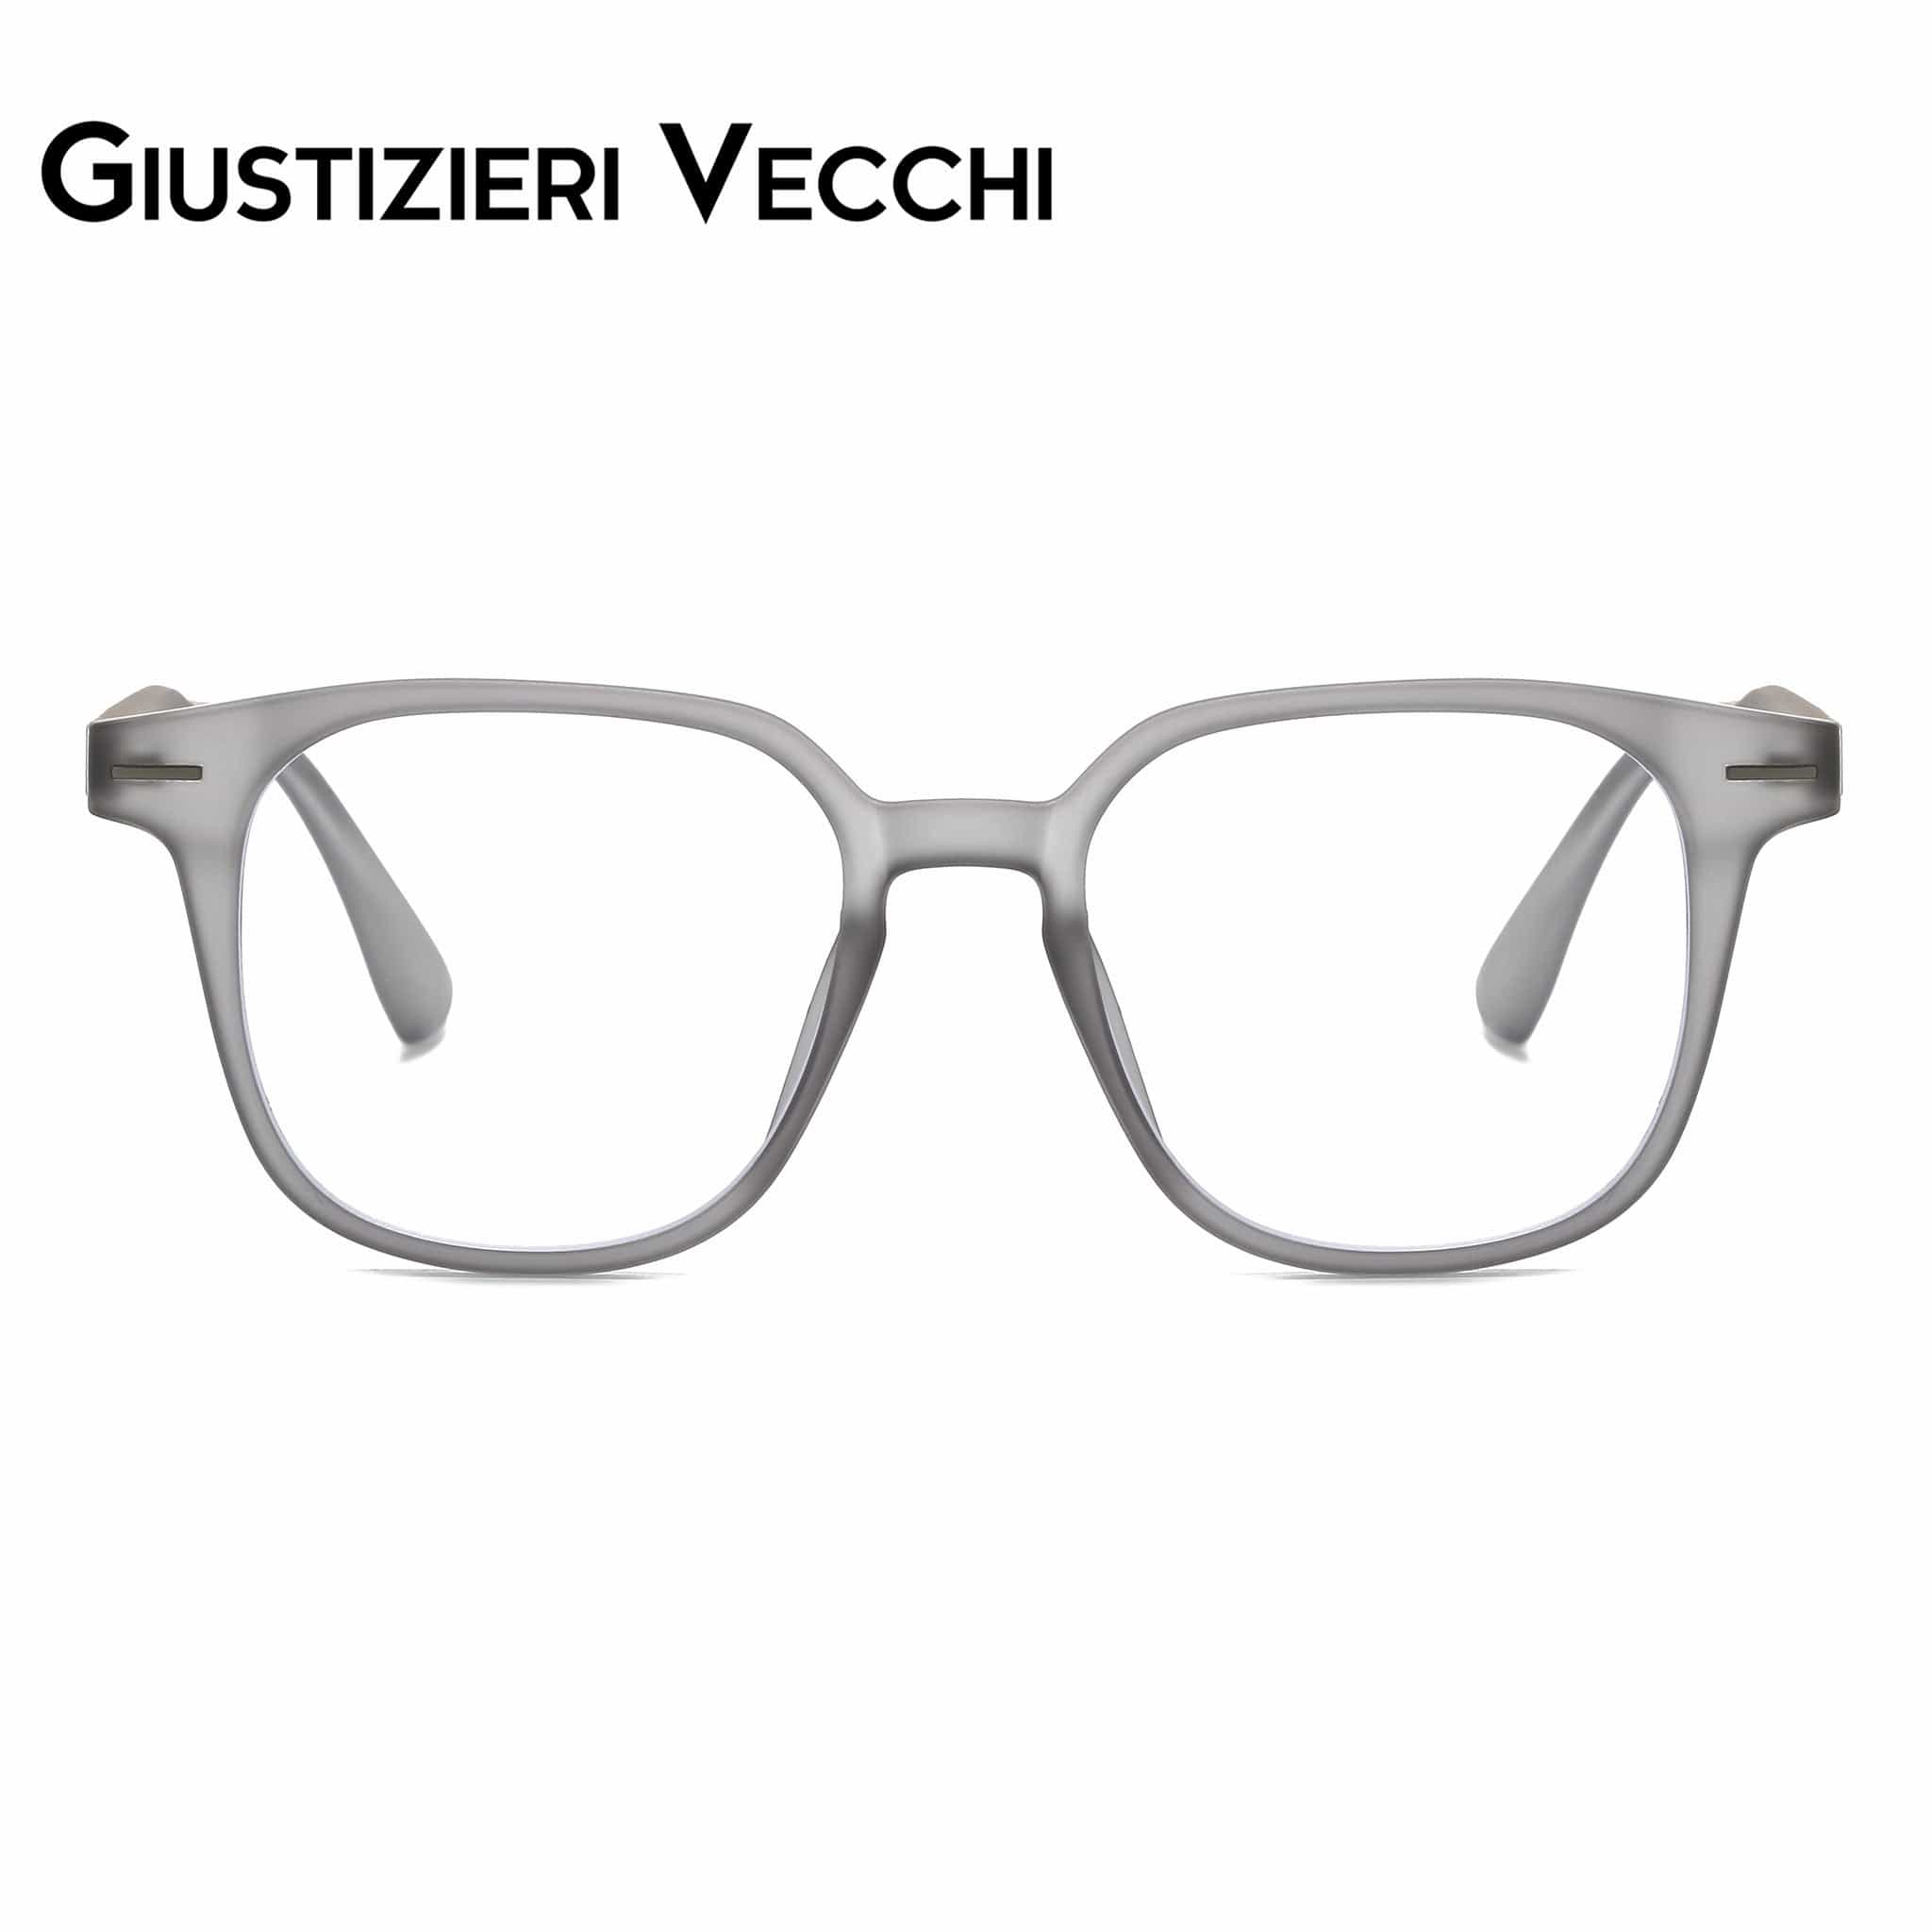 GIUSTIZIERI VECCHI Eyeglasses Small / Silver Sand Crystal IceWave Duo